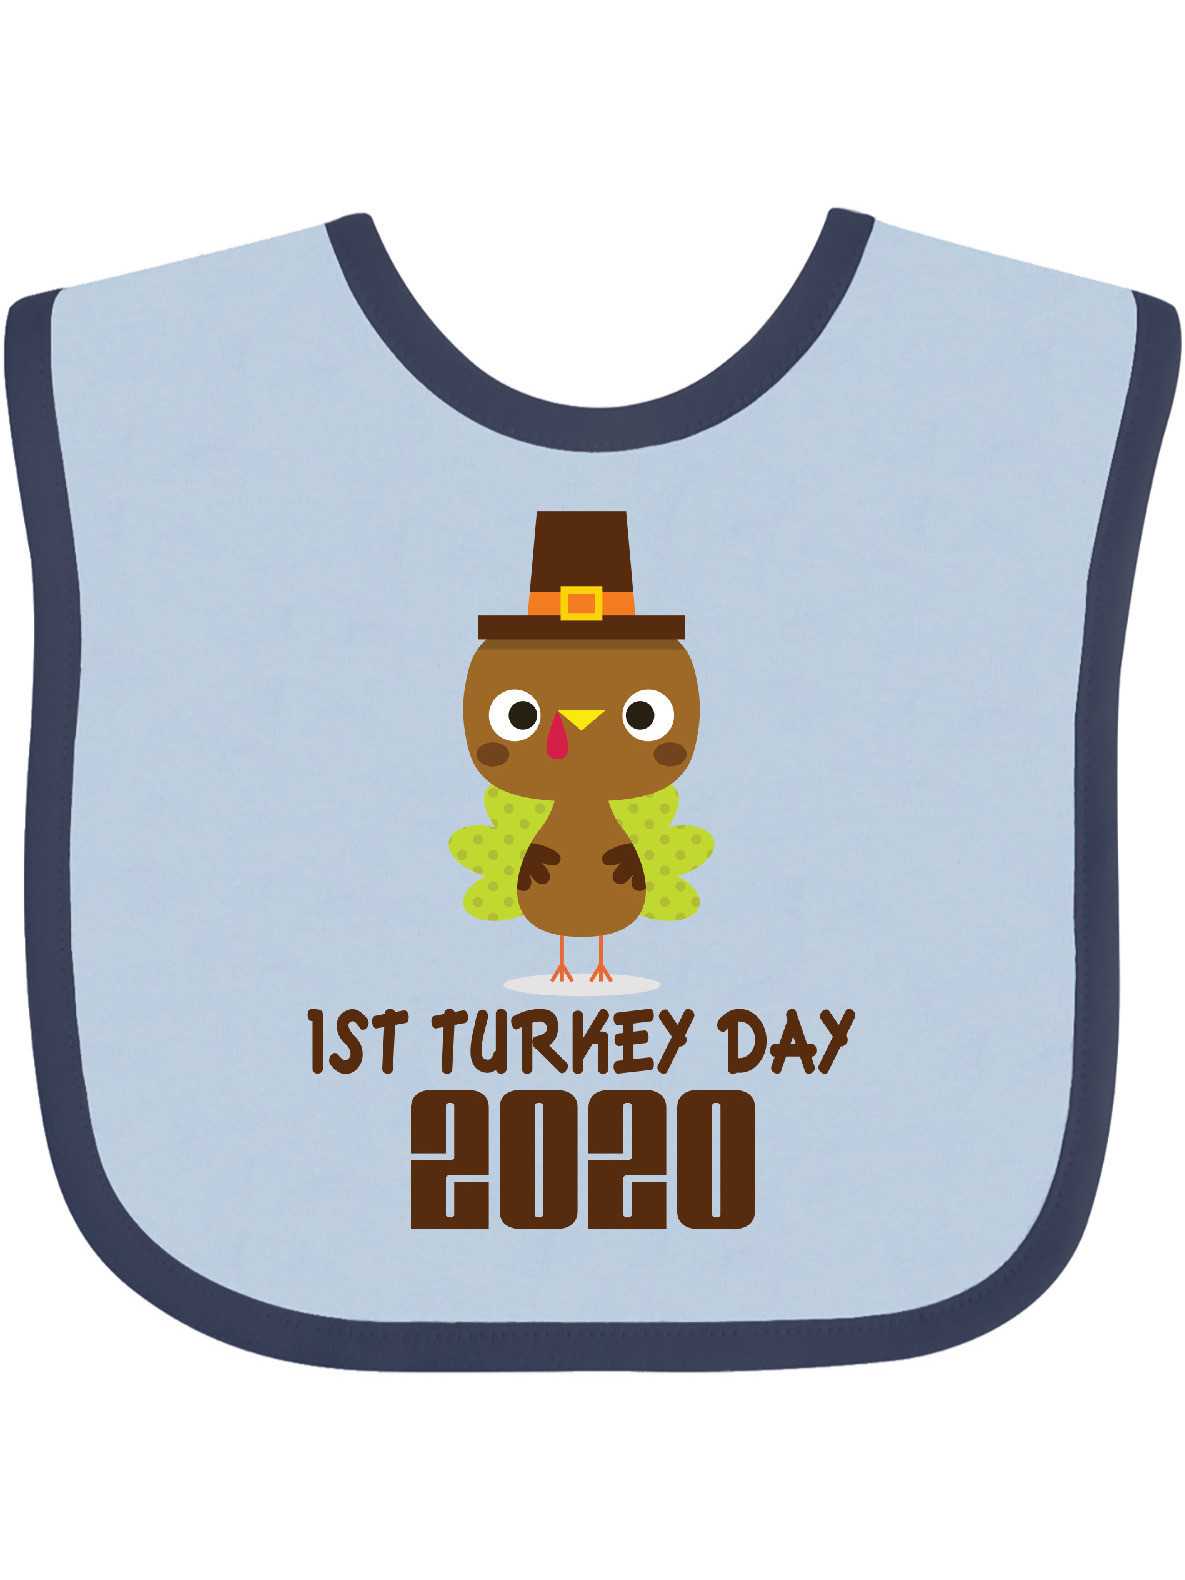 Turkey For Thanksgiving 2020
 1st Thanksgiving Turkey Day 2020 Baby Bib Walmart